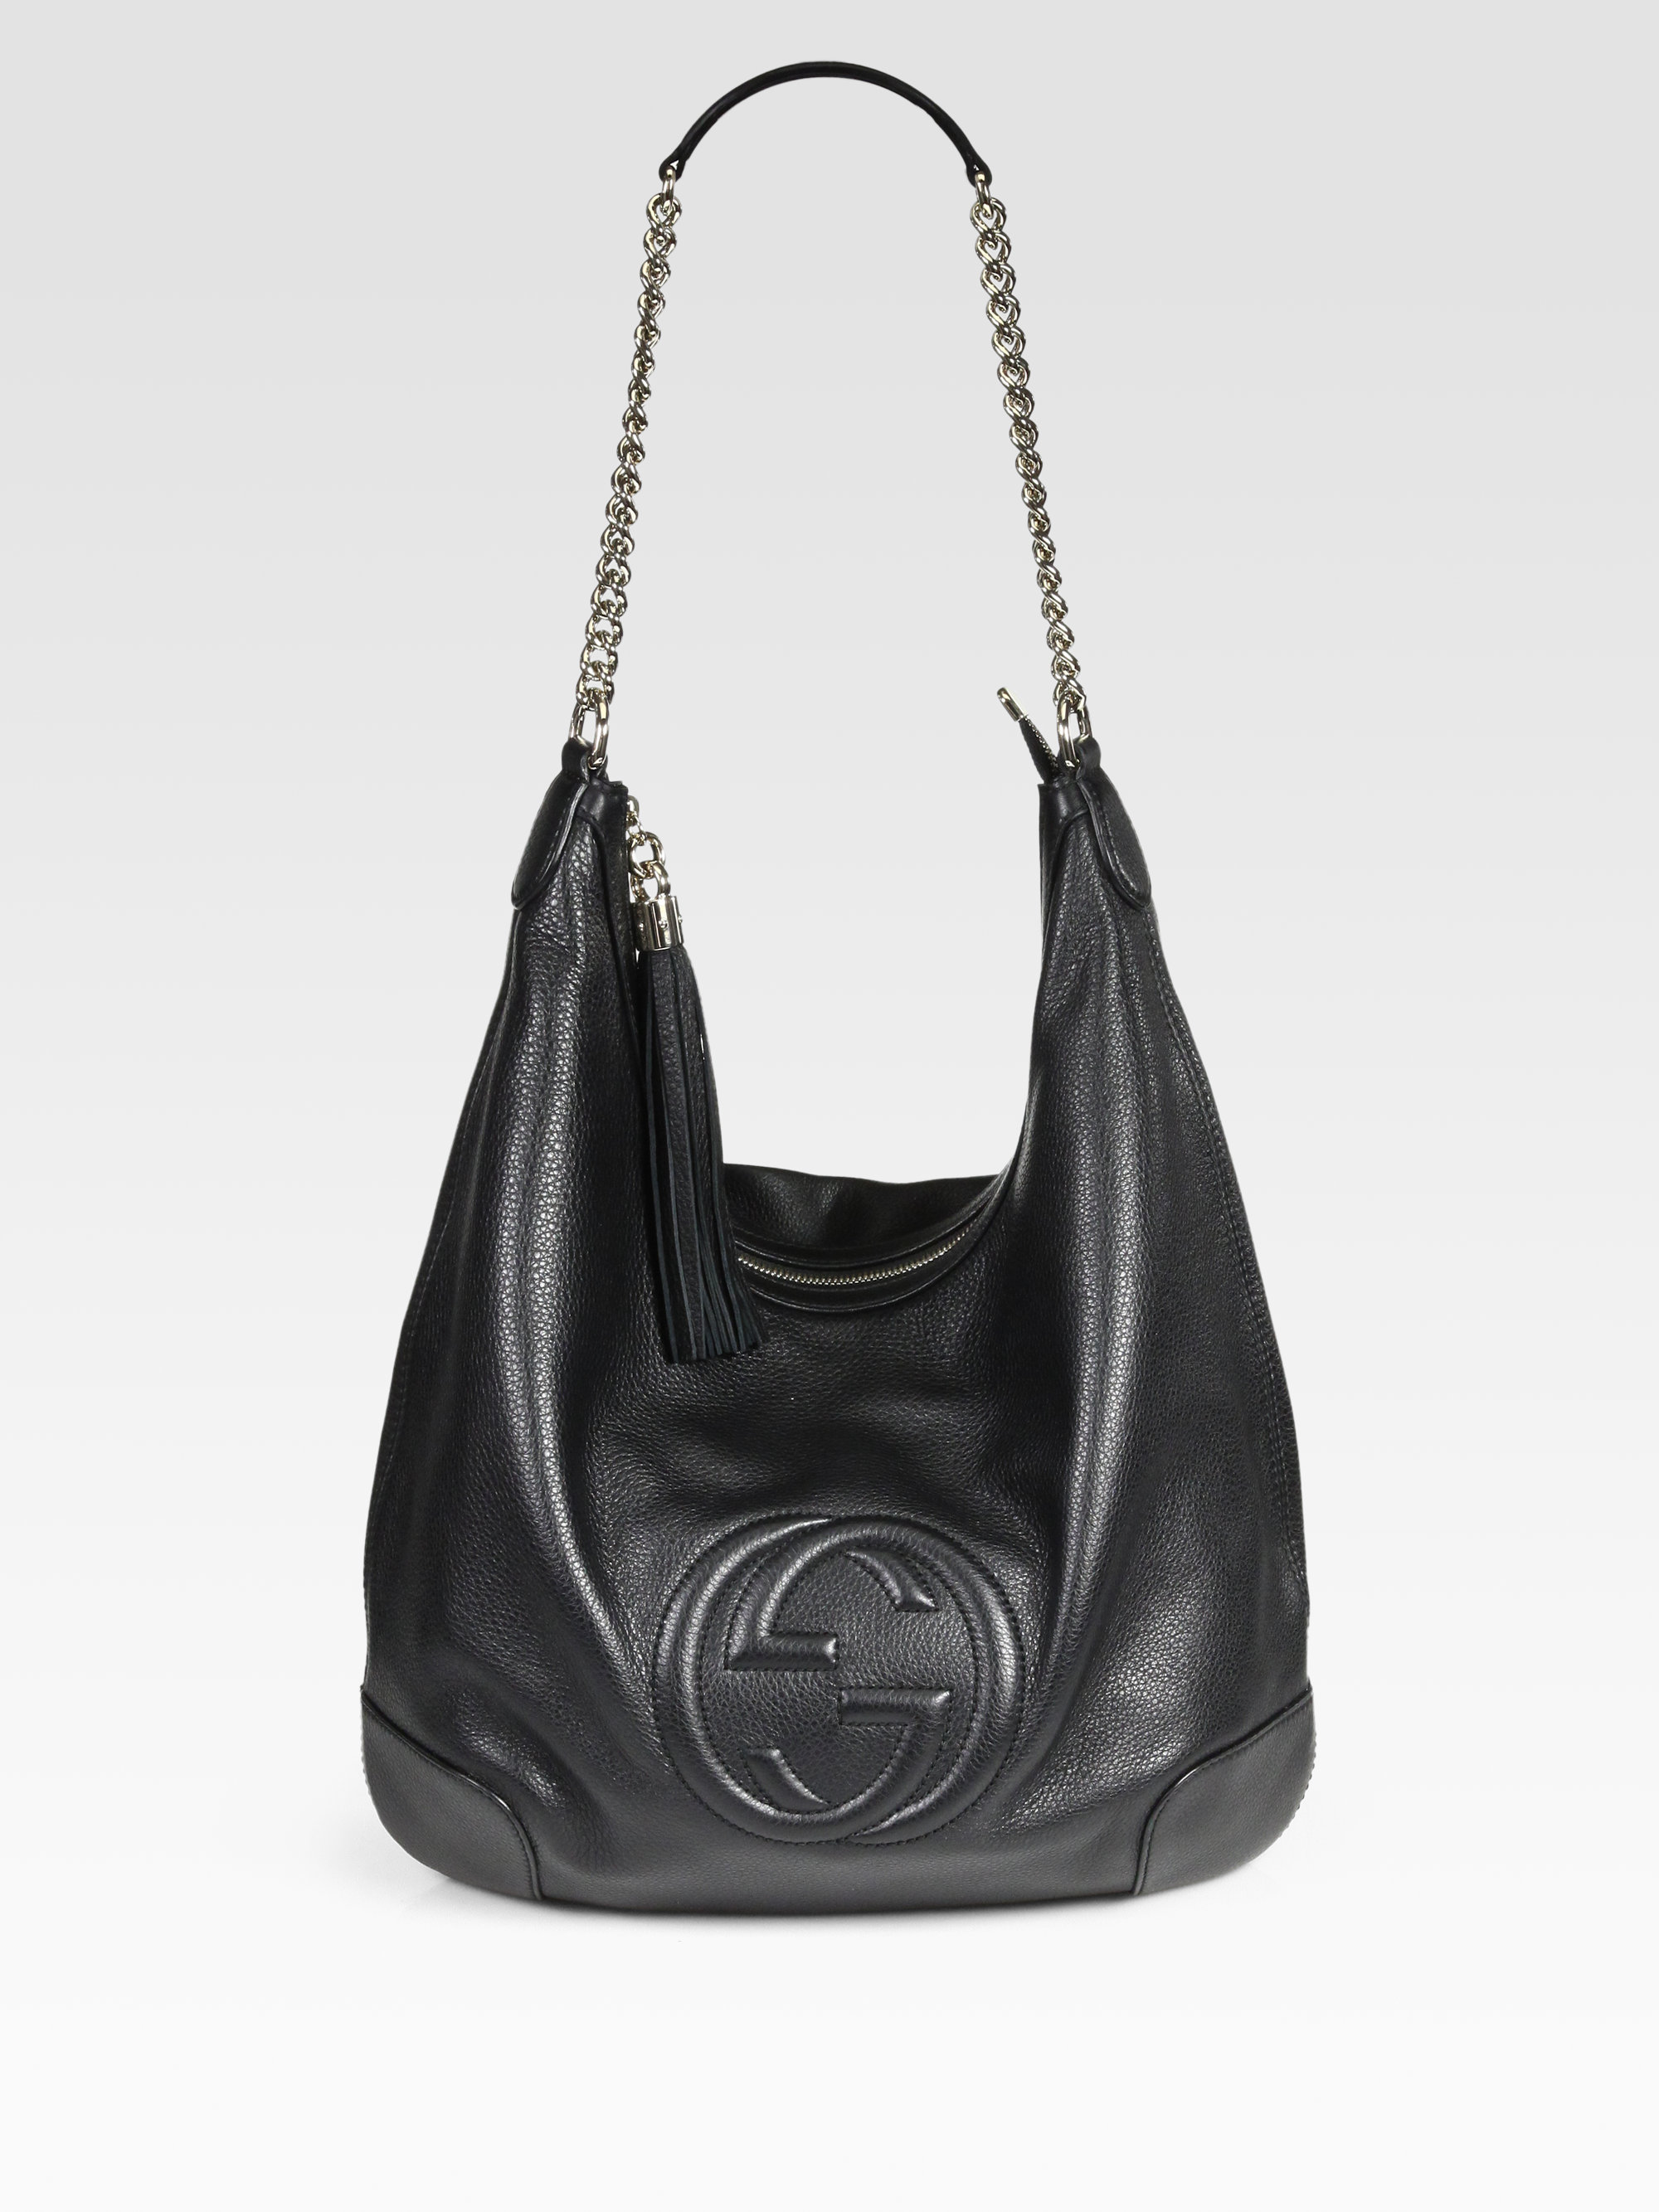 Gucci Soho Leather Chain Hobo Bag in Black - Lyst